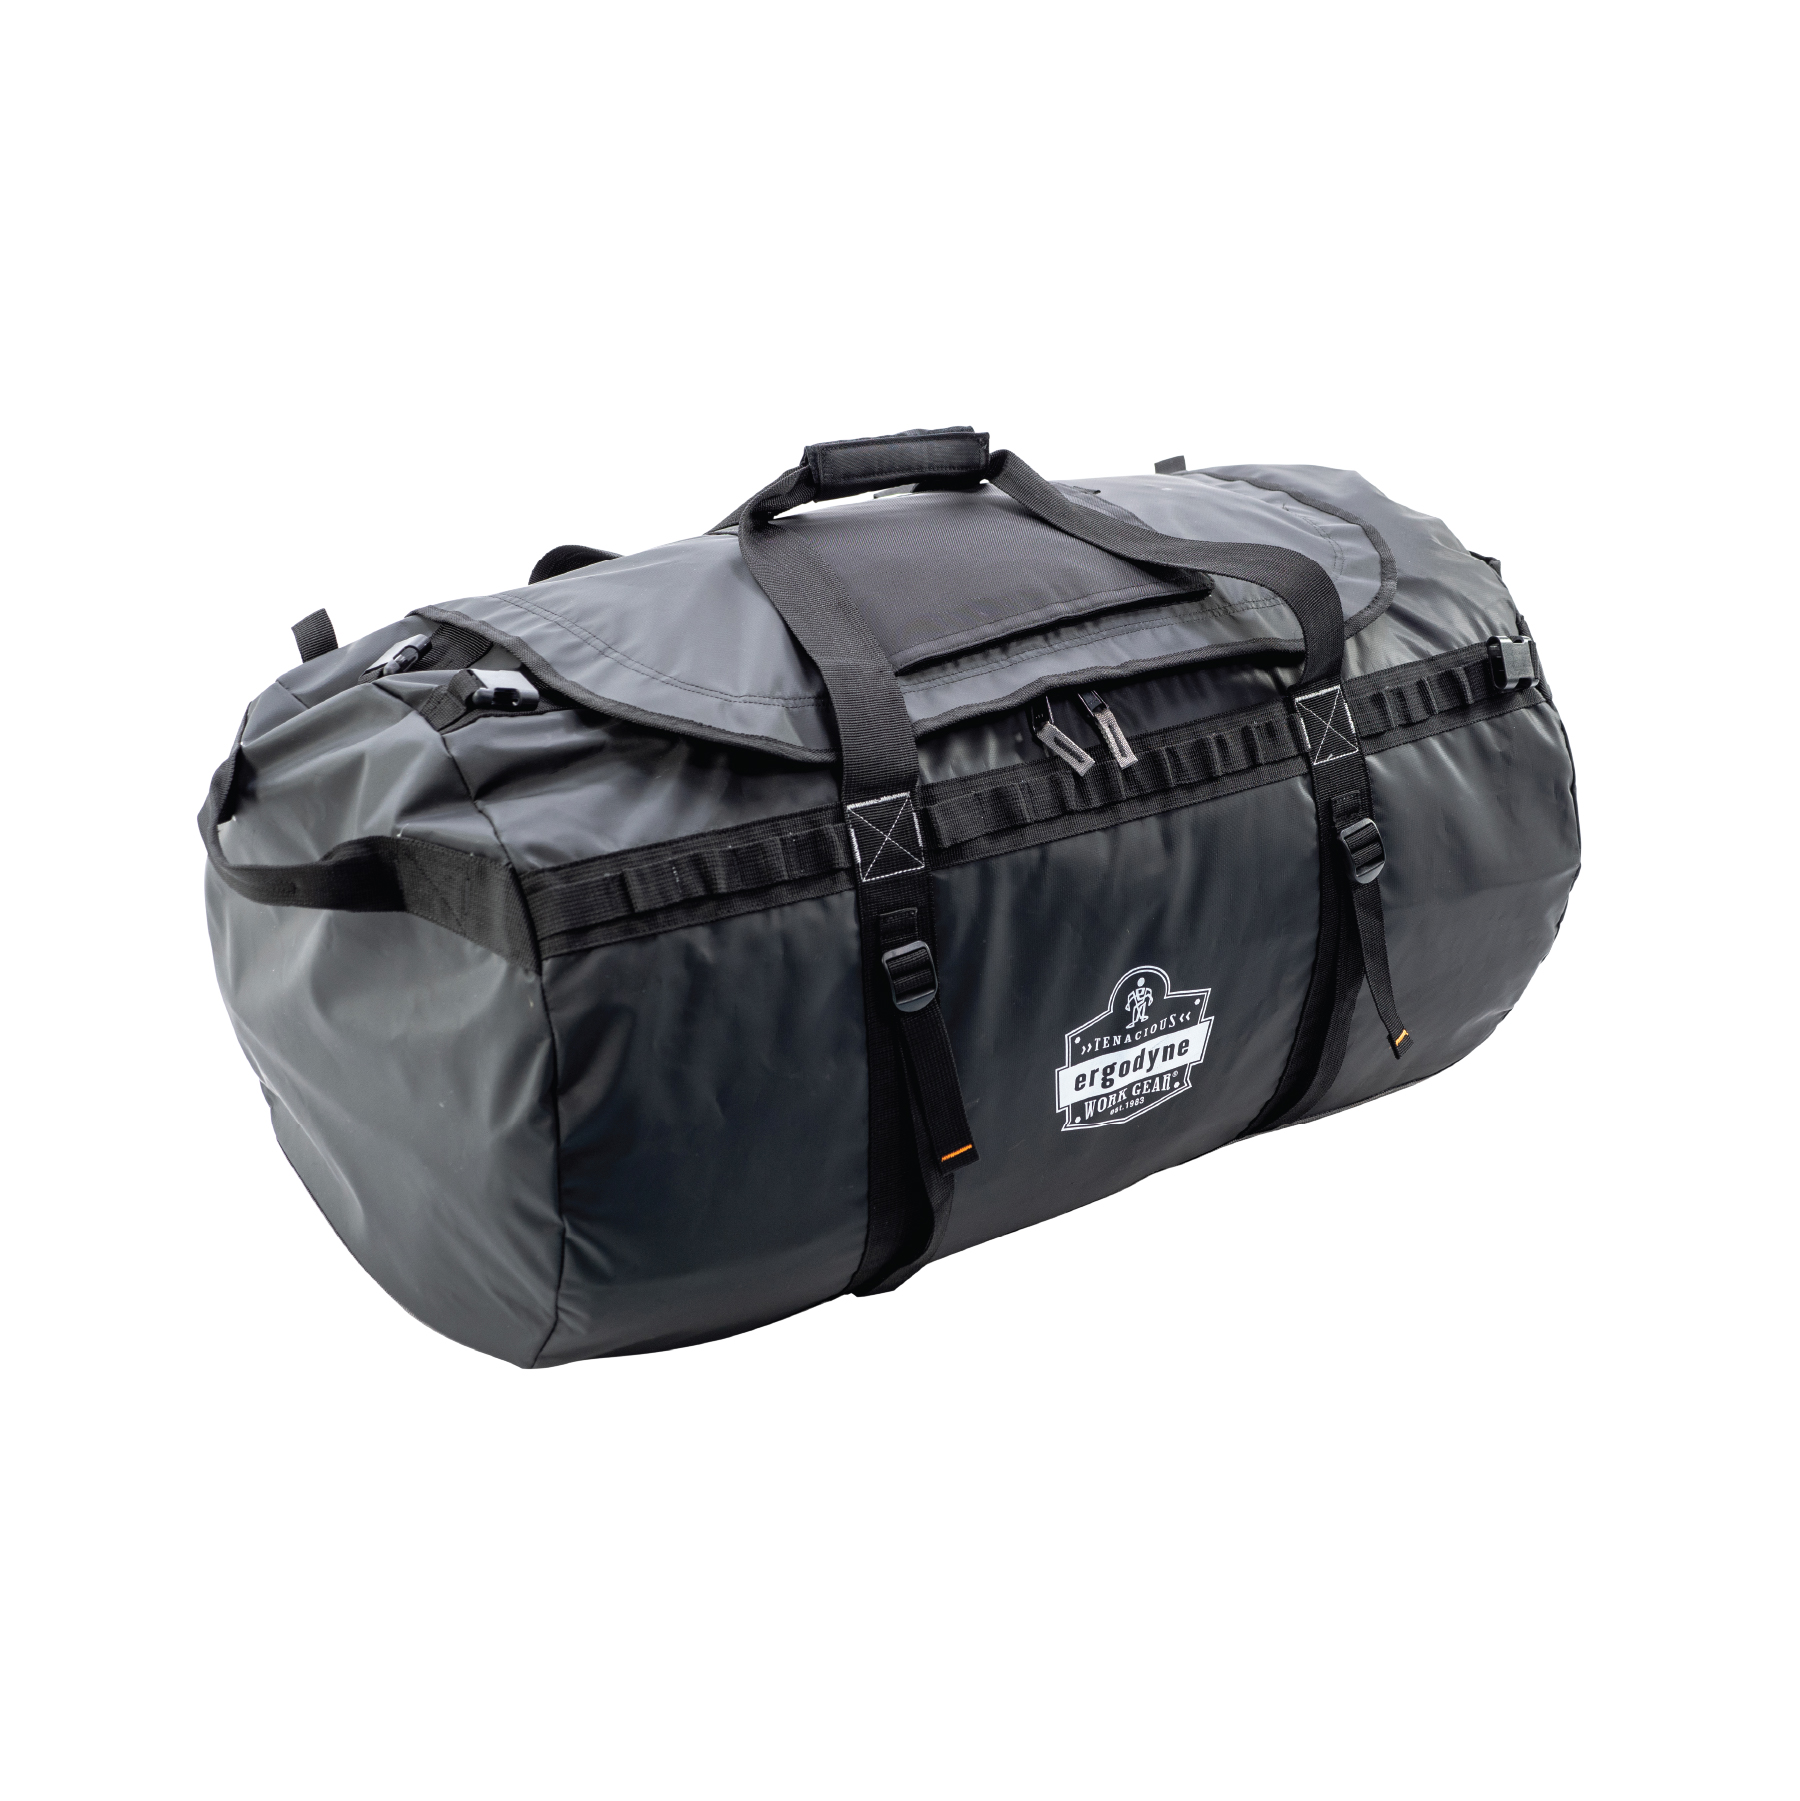 https://www.ergodyne.com/sites/default/files/product-images/13030-5030-water-resistant-duffel-bag-black-front.jpg